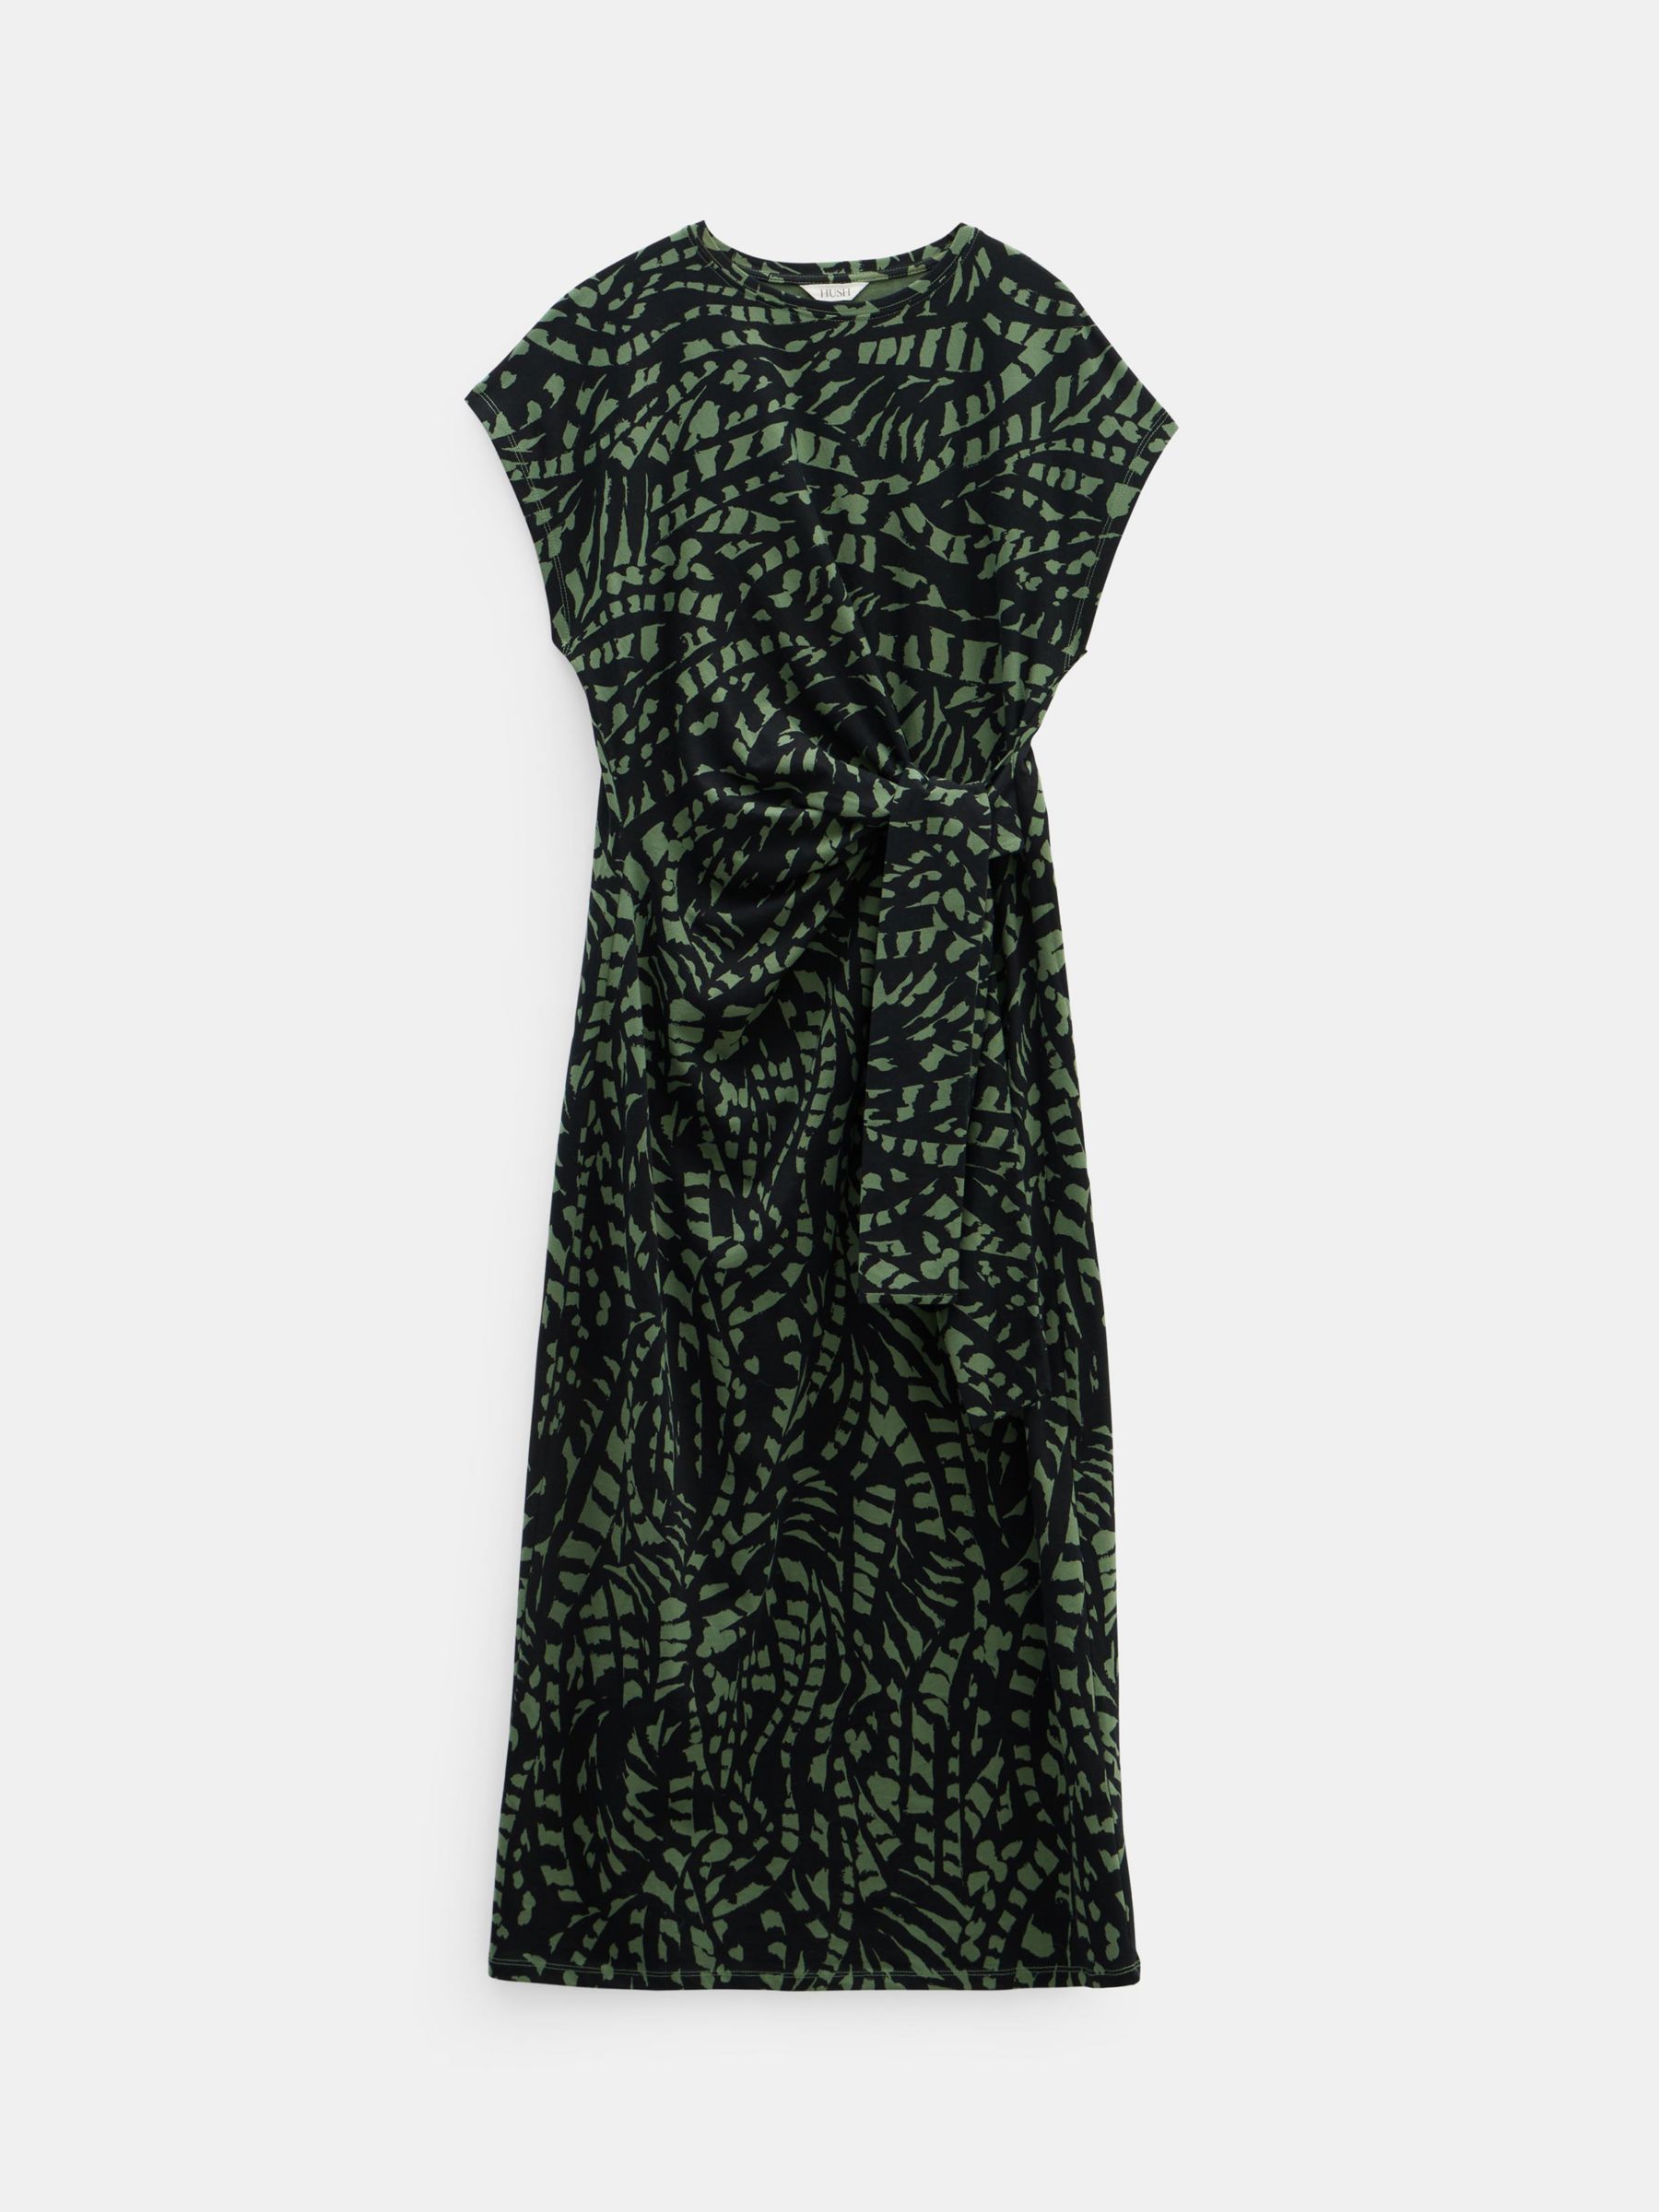 HUSH Trinny Abstract Print Midi Cotton Jersey Dress, Charcoal/Green, 10